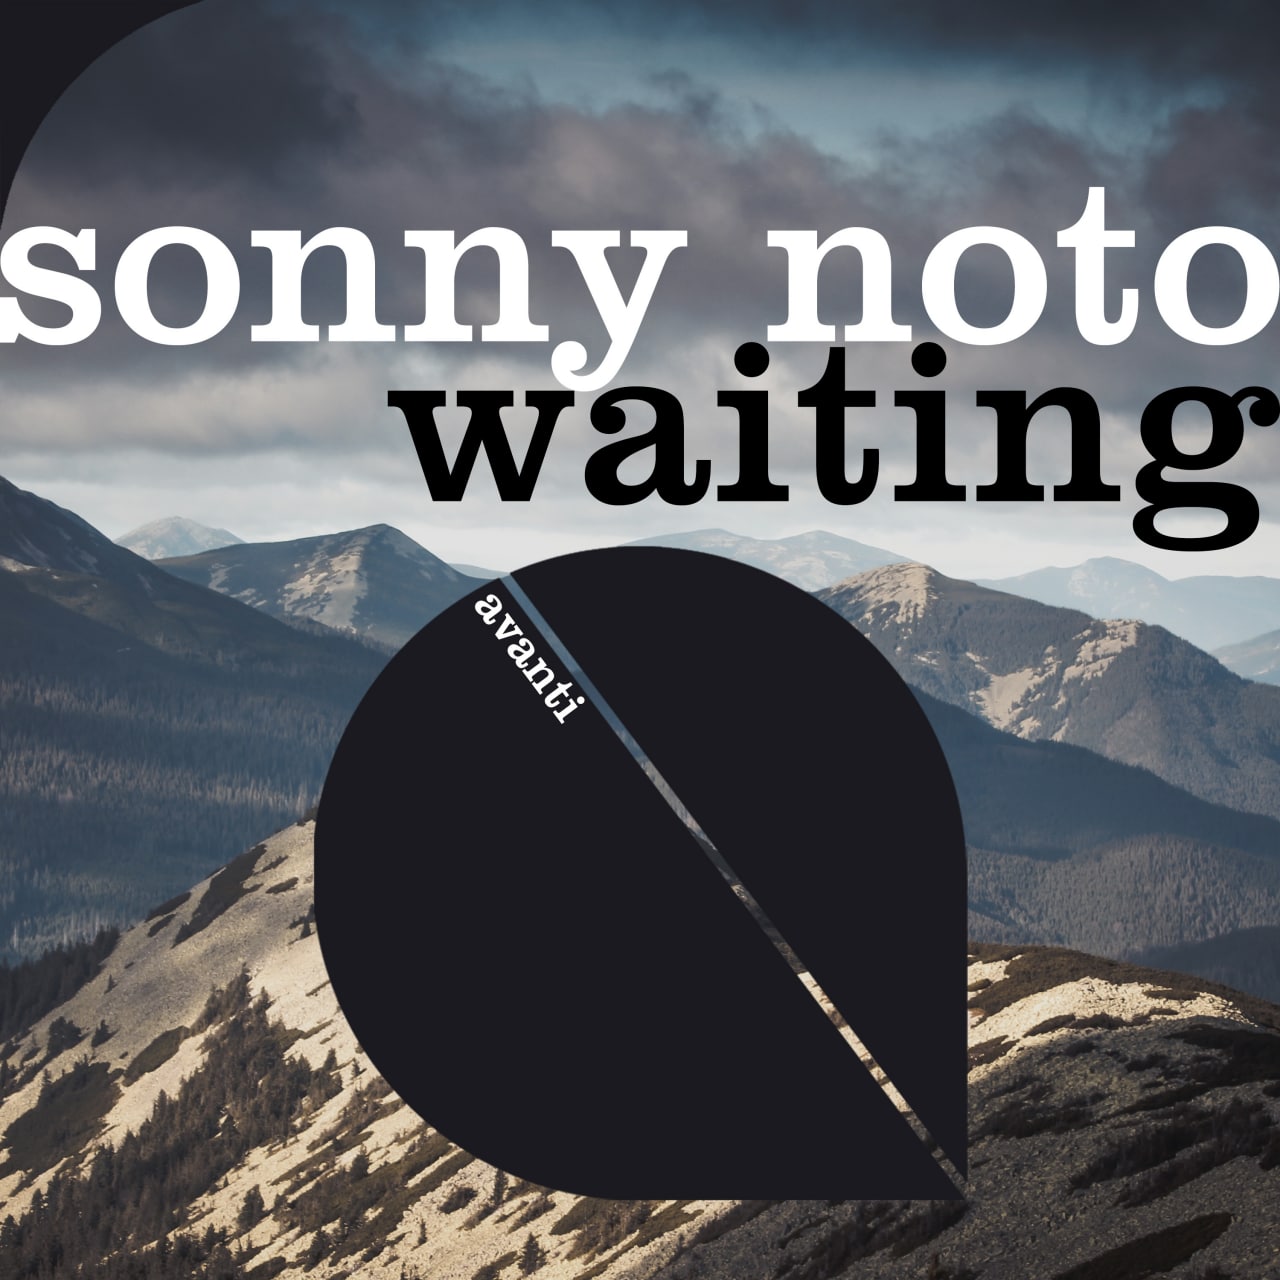 Sonny Noto - Waiting (extended Mix) on Revolution Radio